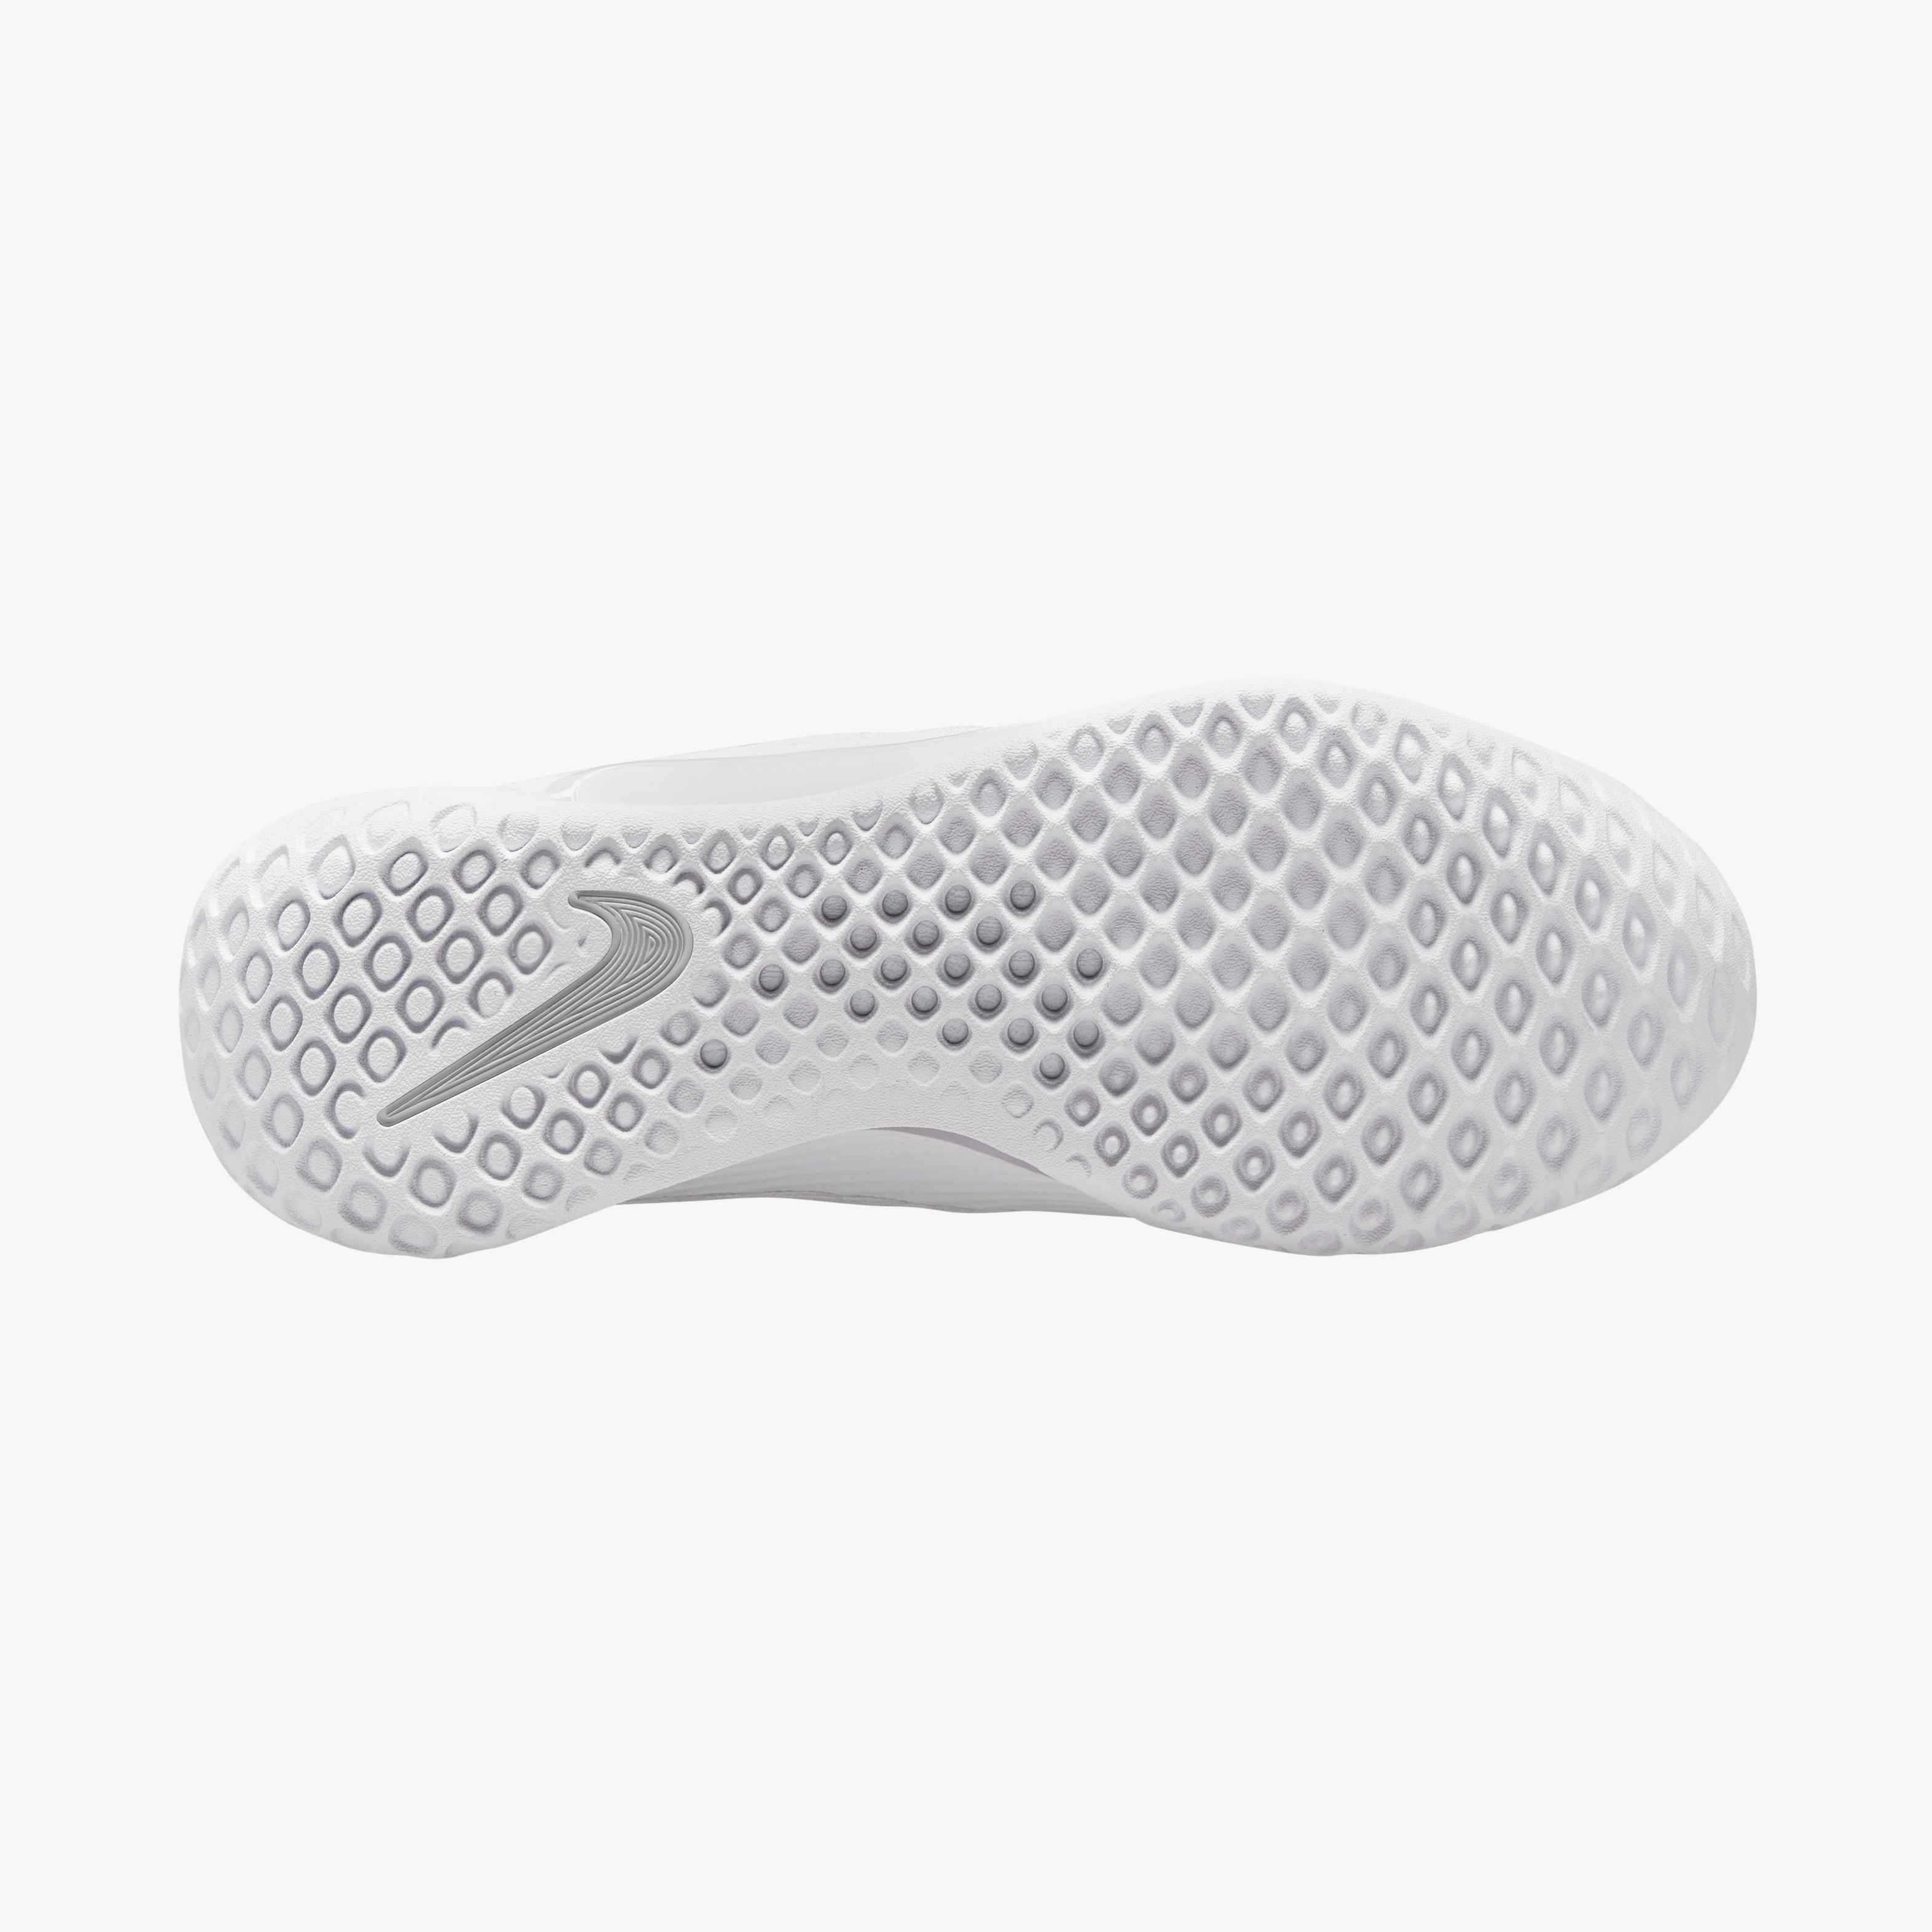 Nike Women's Zoom Court NXT Tennis Shoes in White/Metallic Silver-Grey Fog